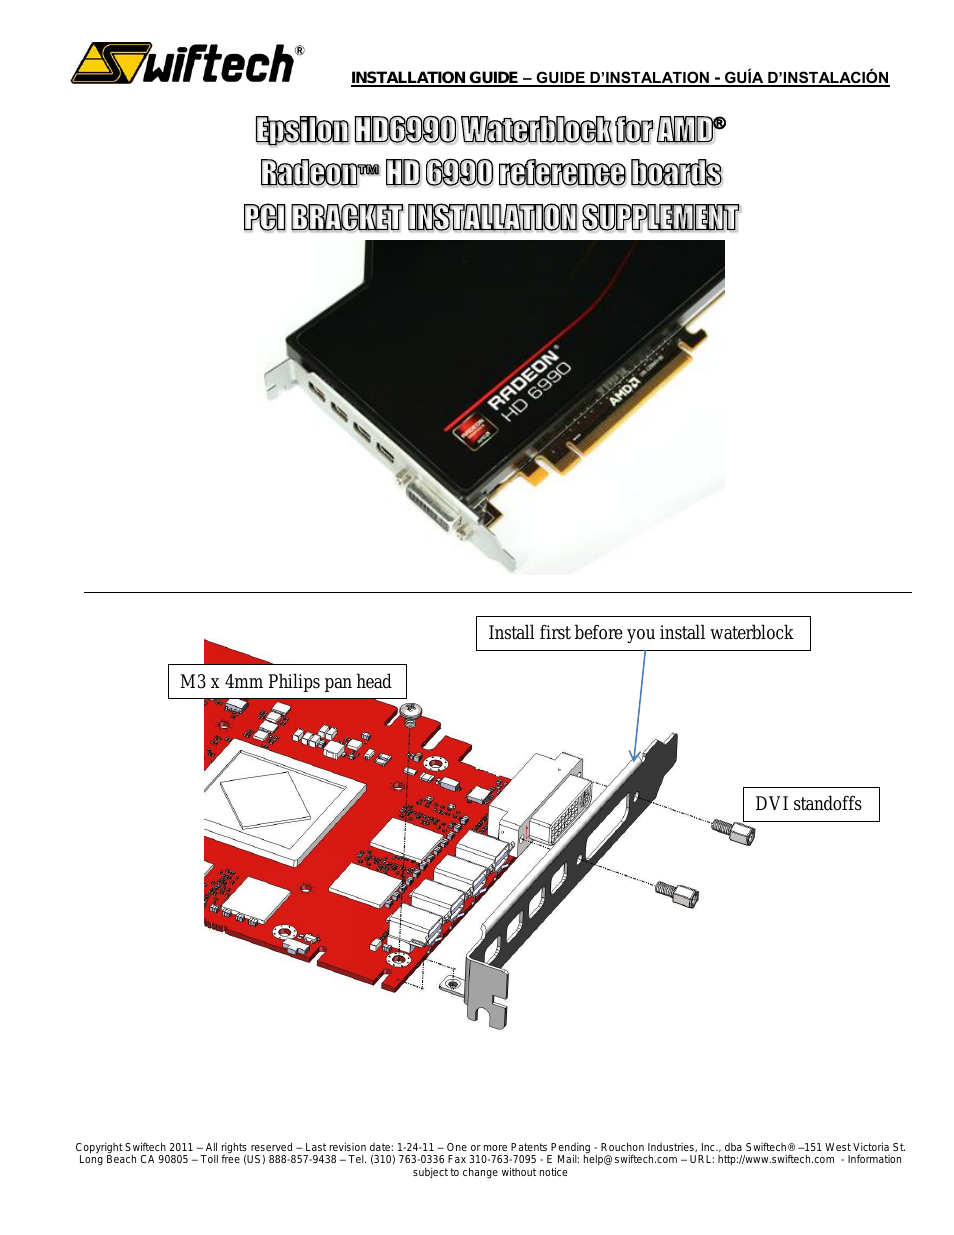 EPSILON HD6990 PCI bracket supplement